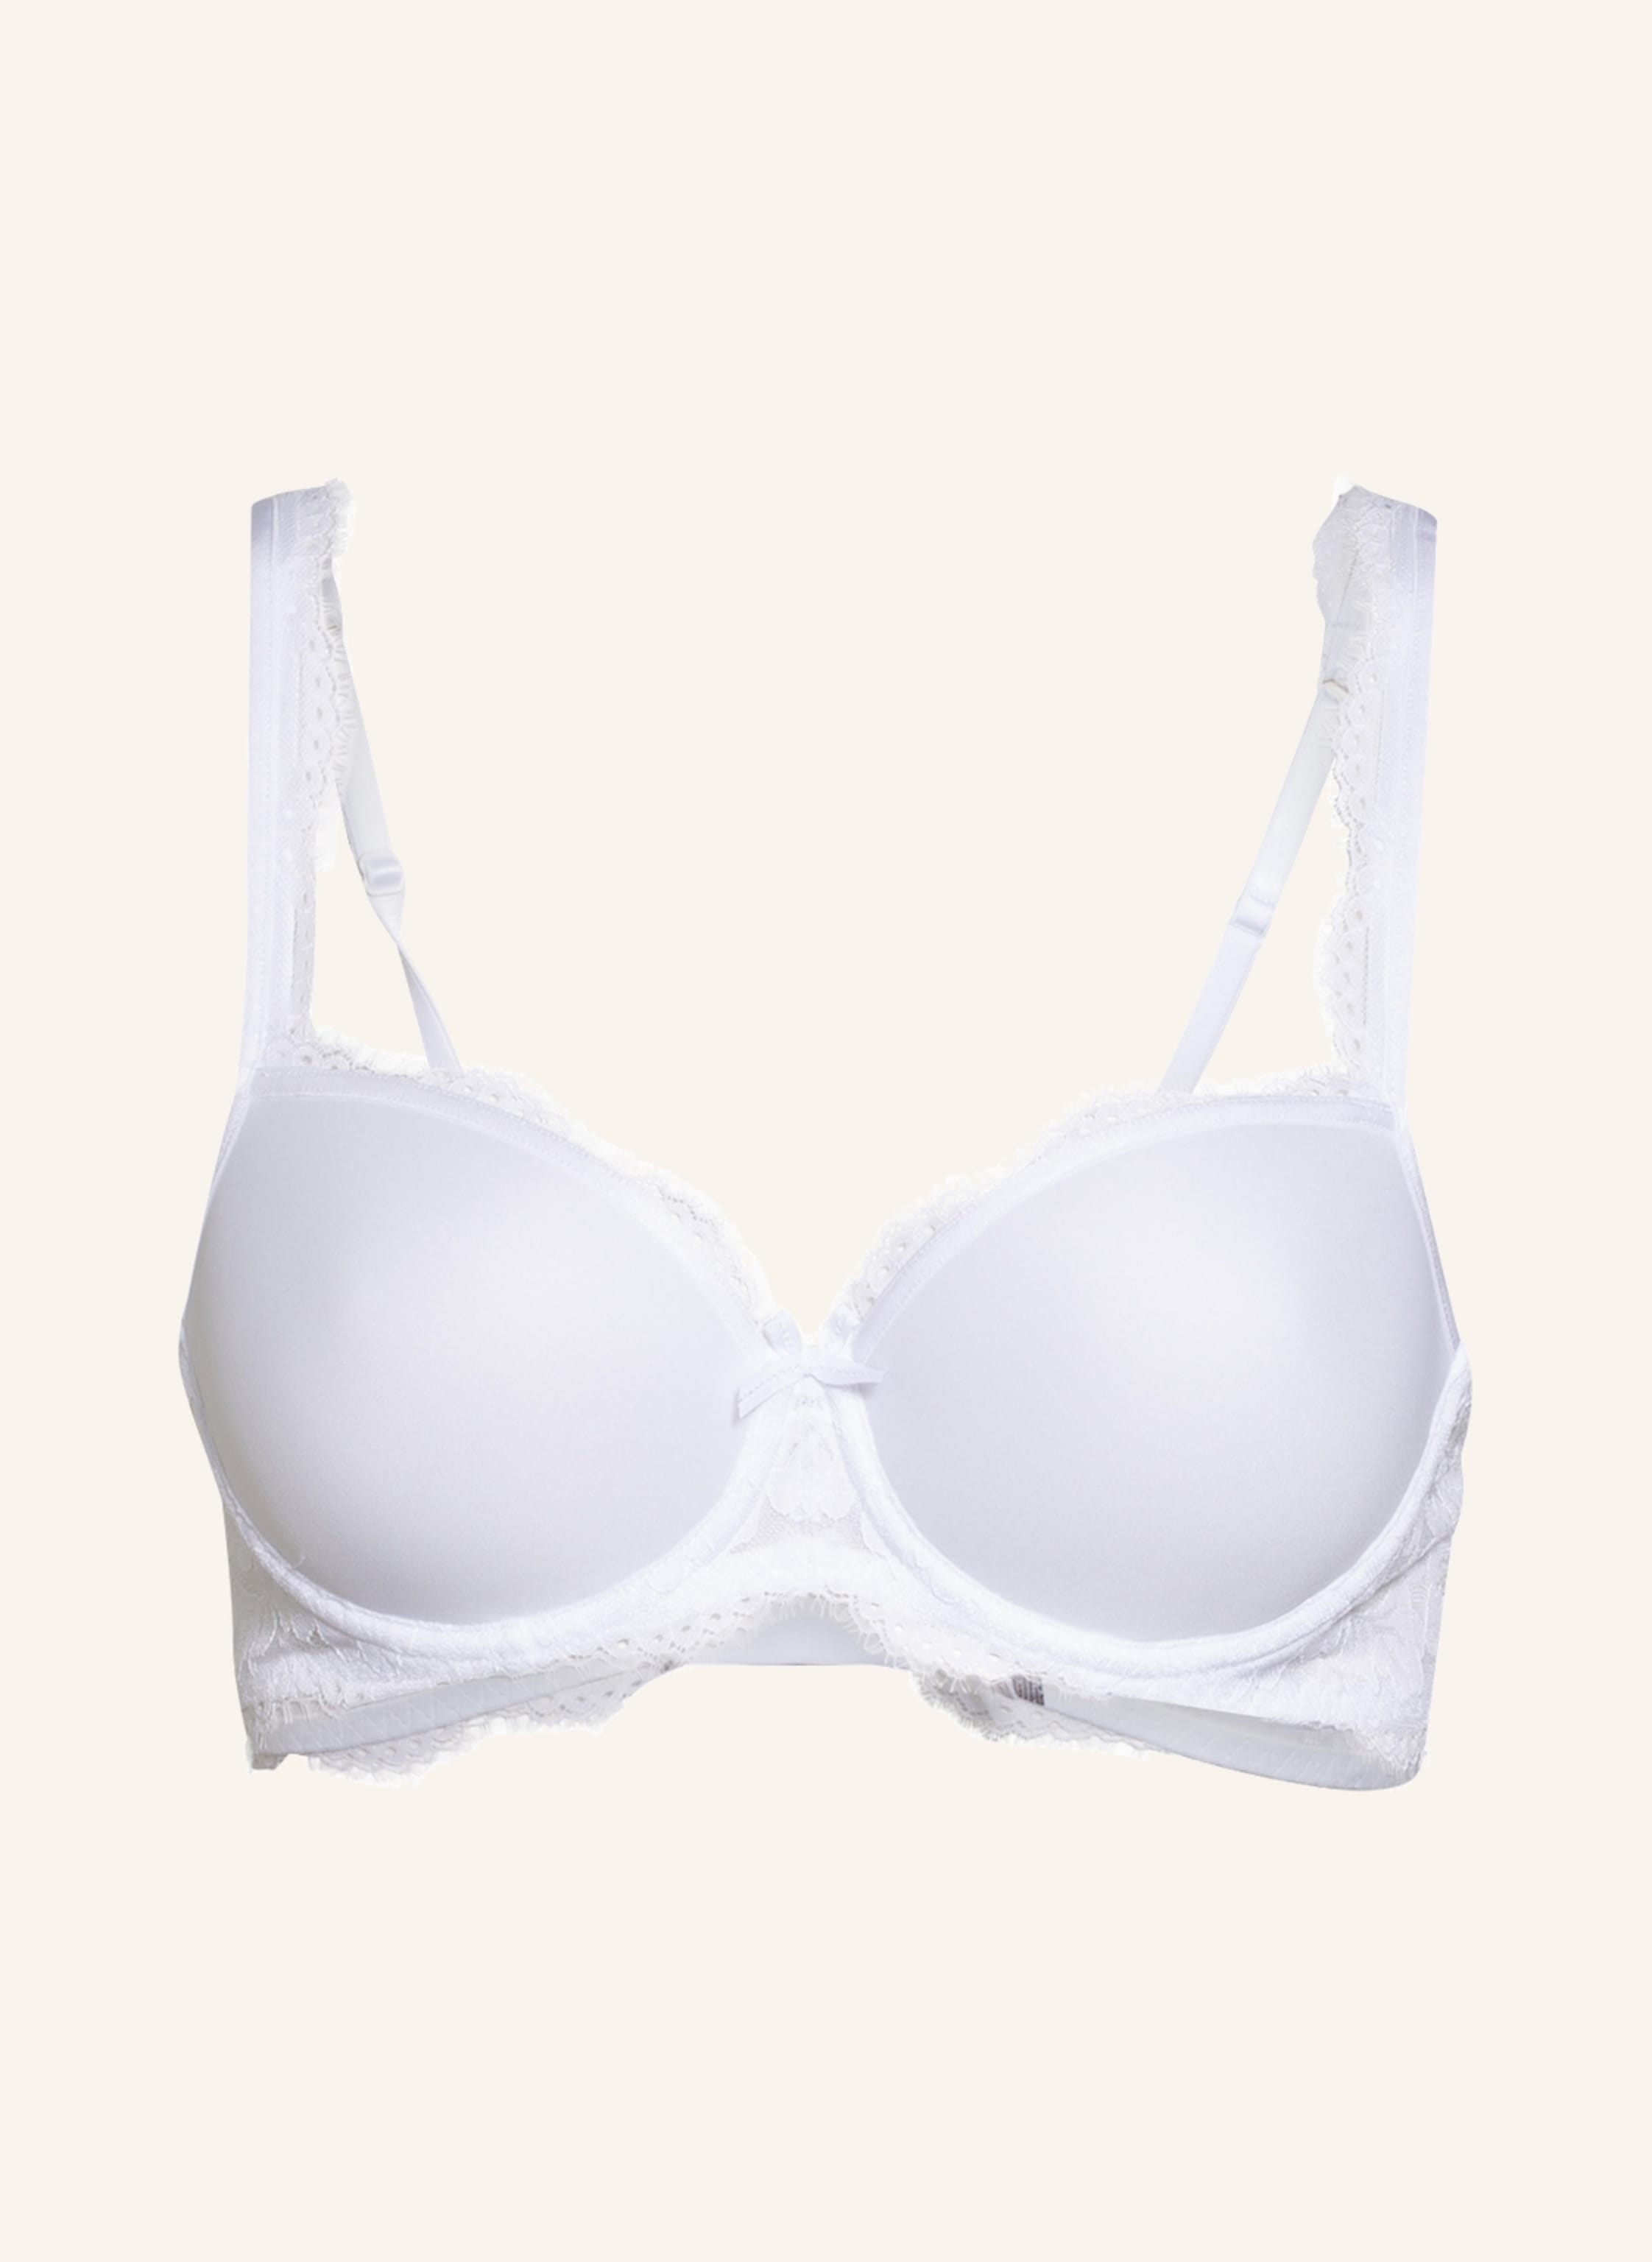 mey Spacer bra series AMAZING in white